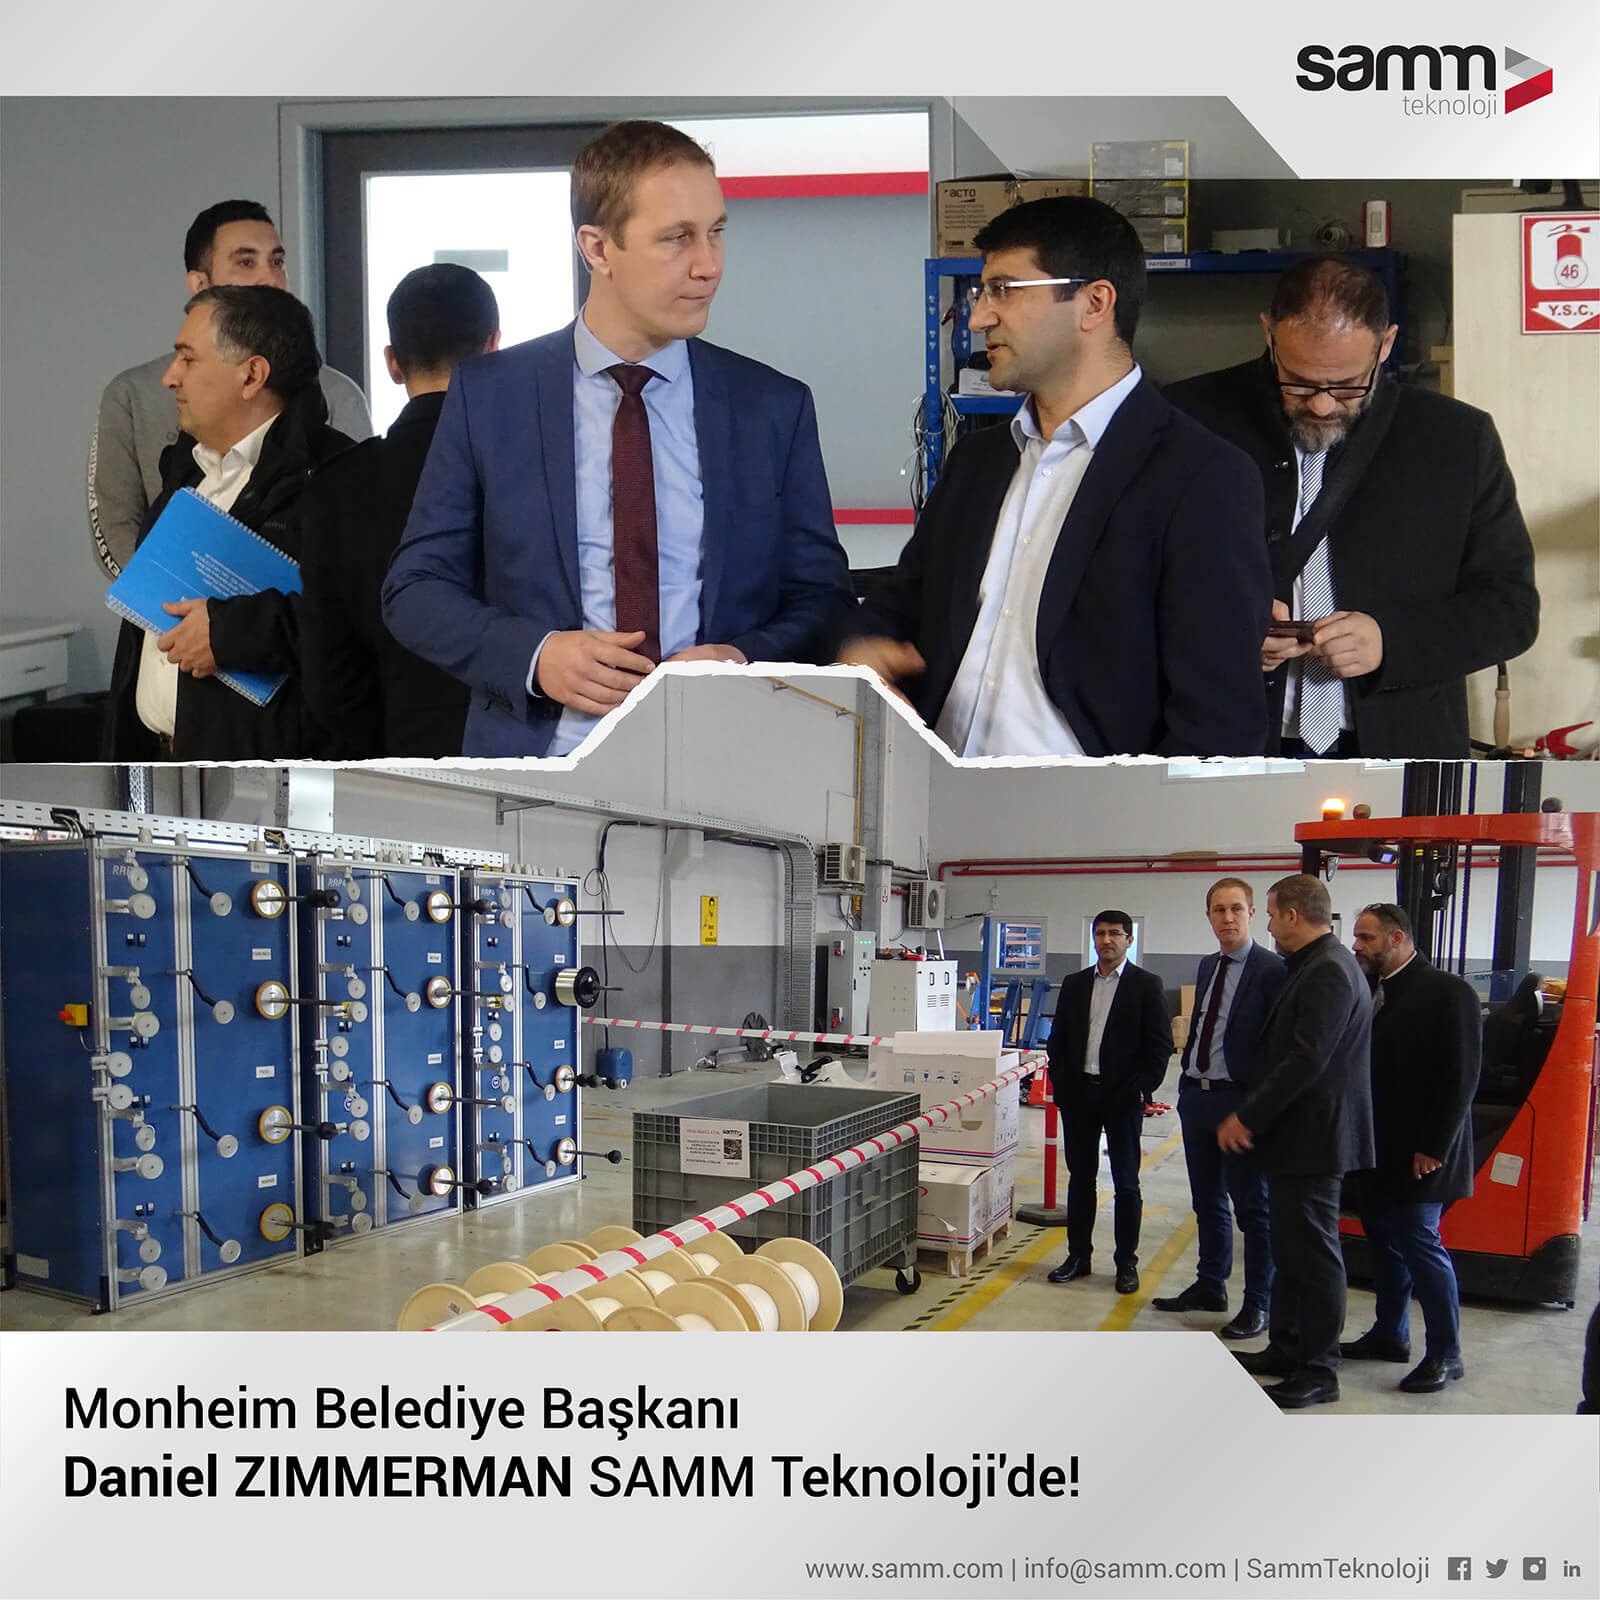 Monheim am Rhein Belediye Başkanı Bay Daniel Zimmerman SAMM Teknoloji'yi Ziyaret Etti 2